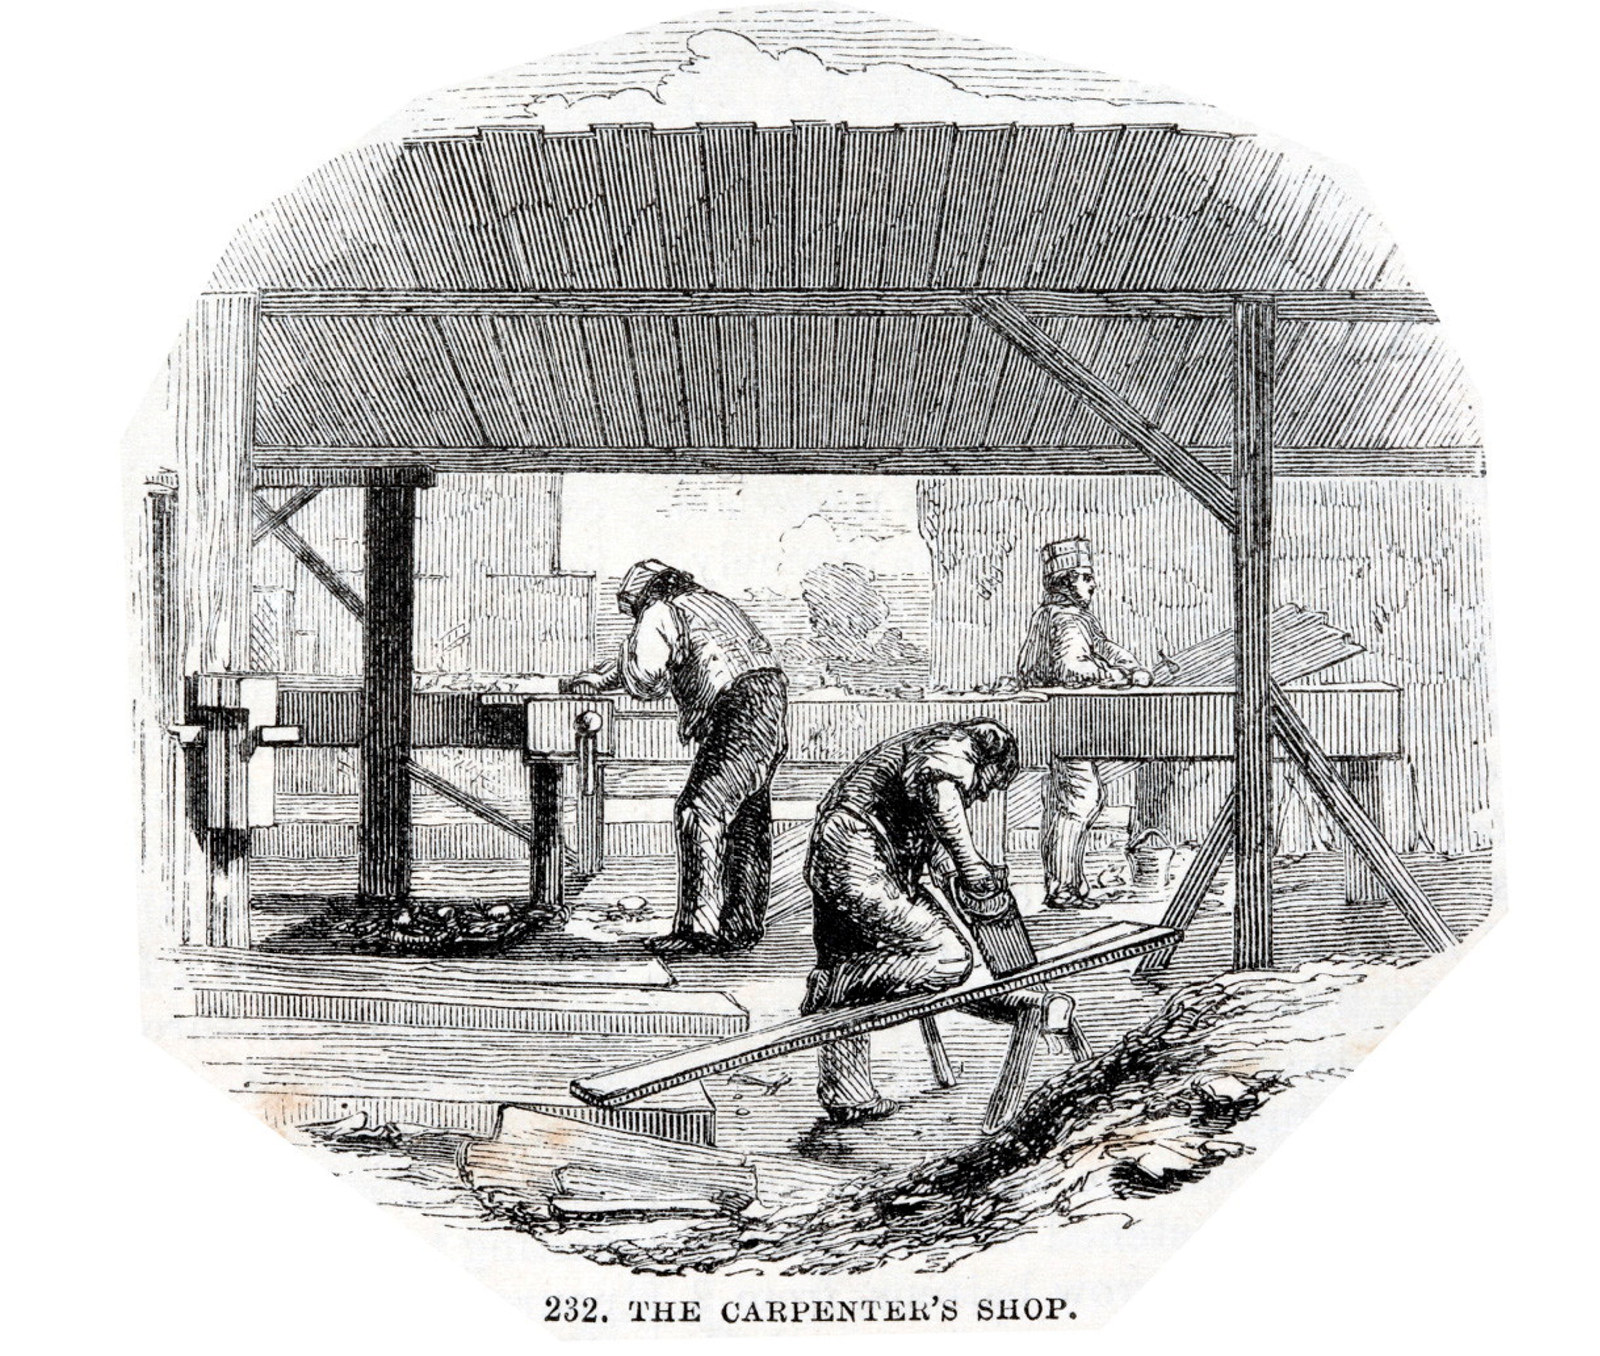 Illustration no.232:'The carpenter's shop' in section on The Carpenter and Joiner, p.33 of 'Illustrations of trades'